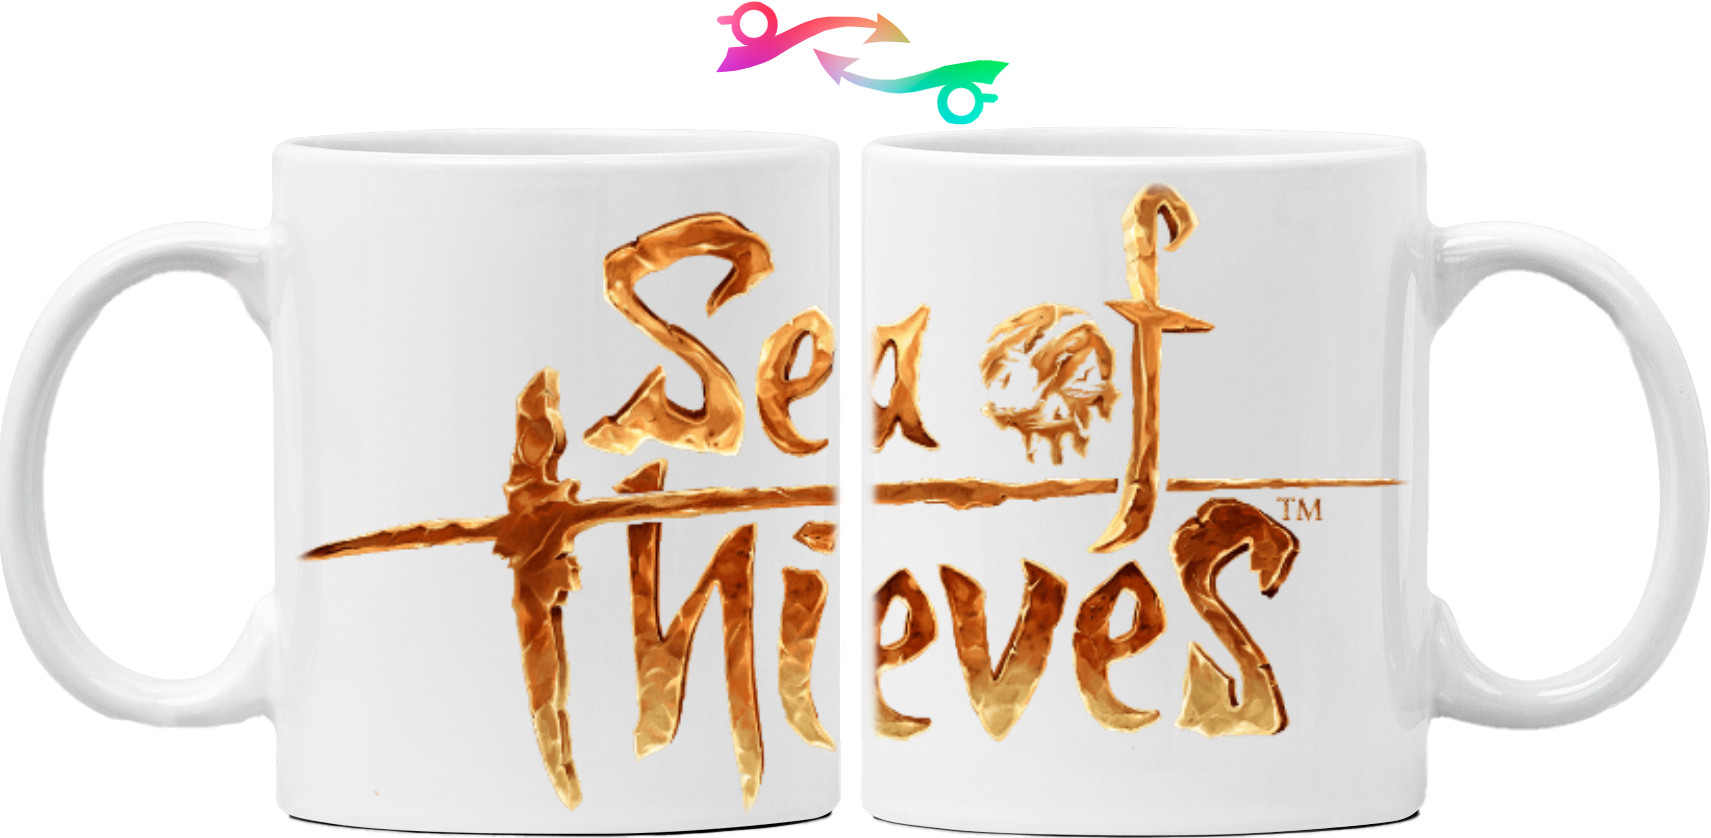 Sea of Thieves logo